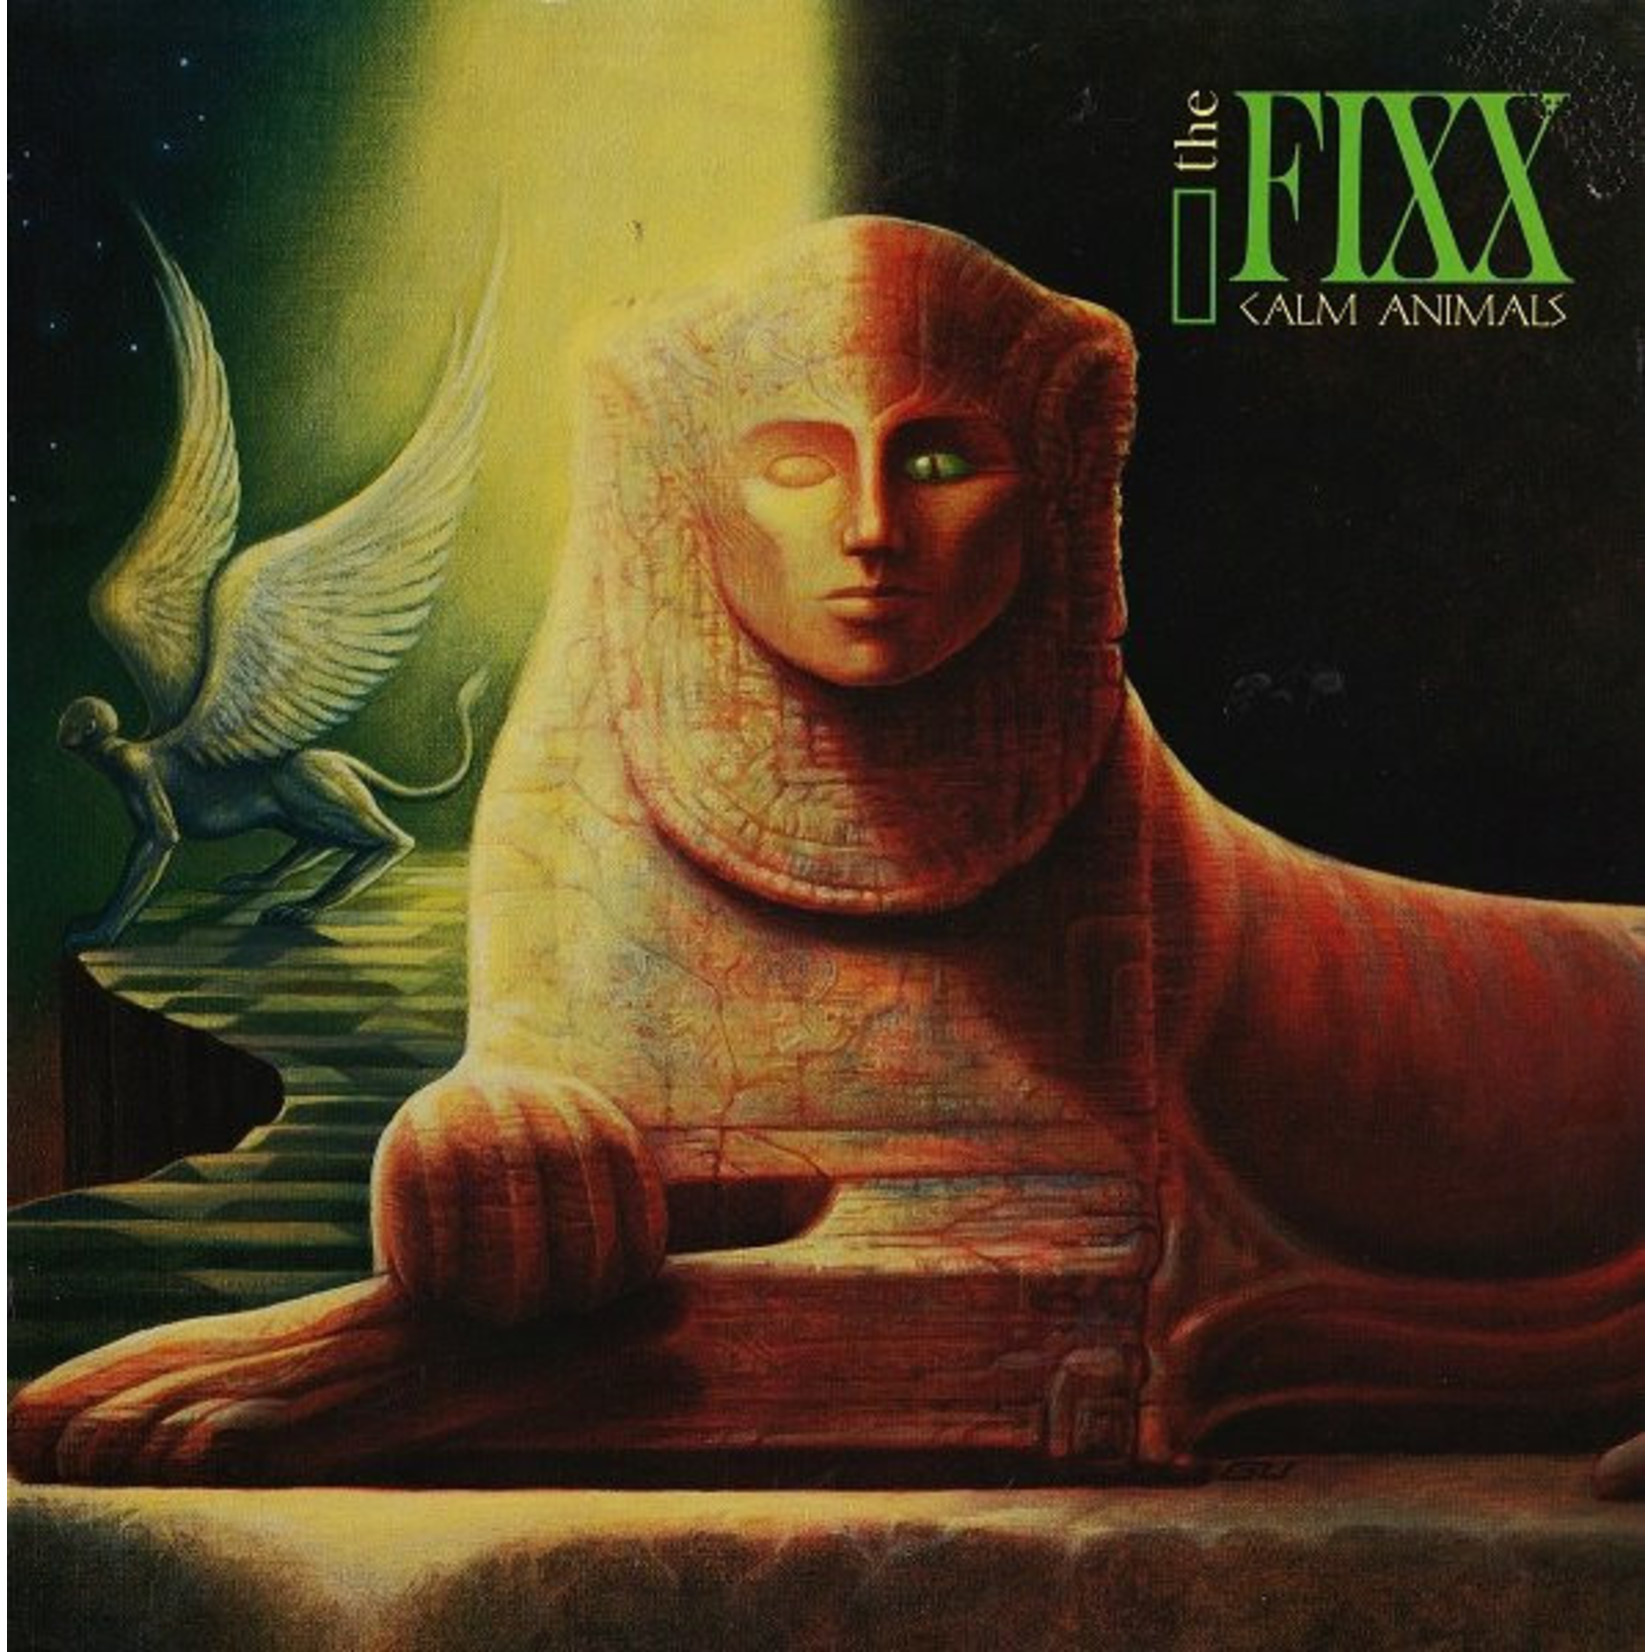 THE FIXX - CALM ANIMALS - LP